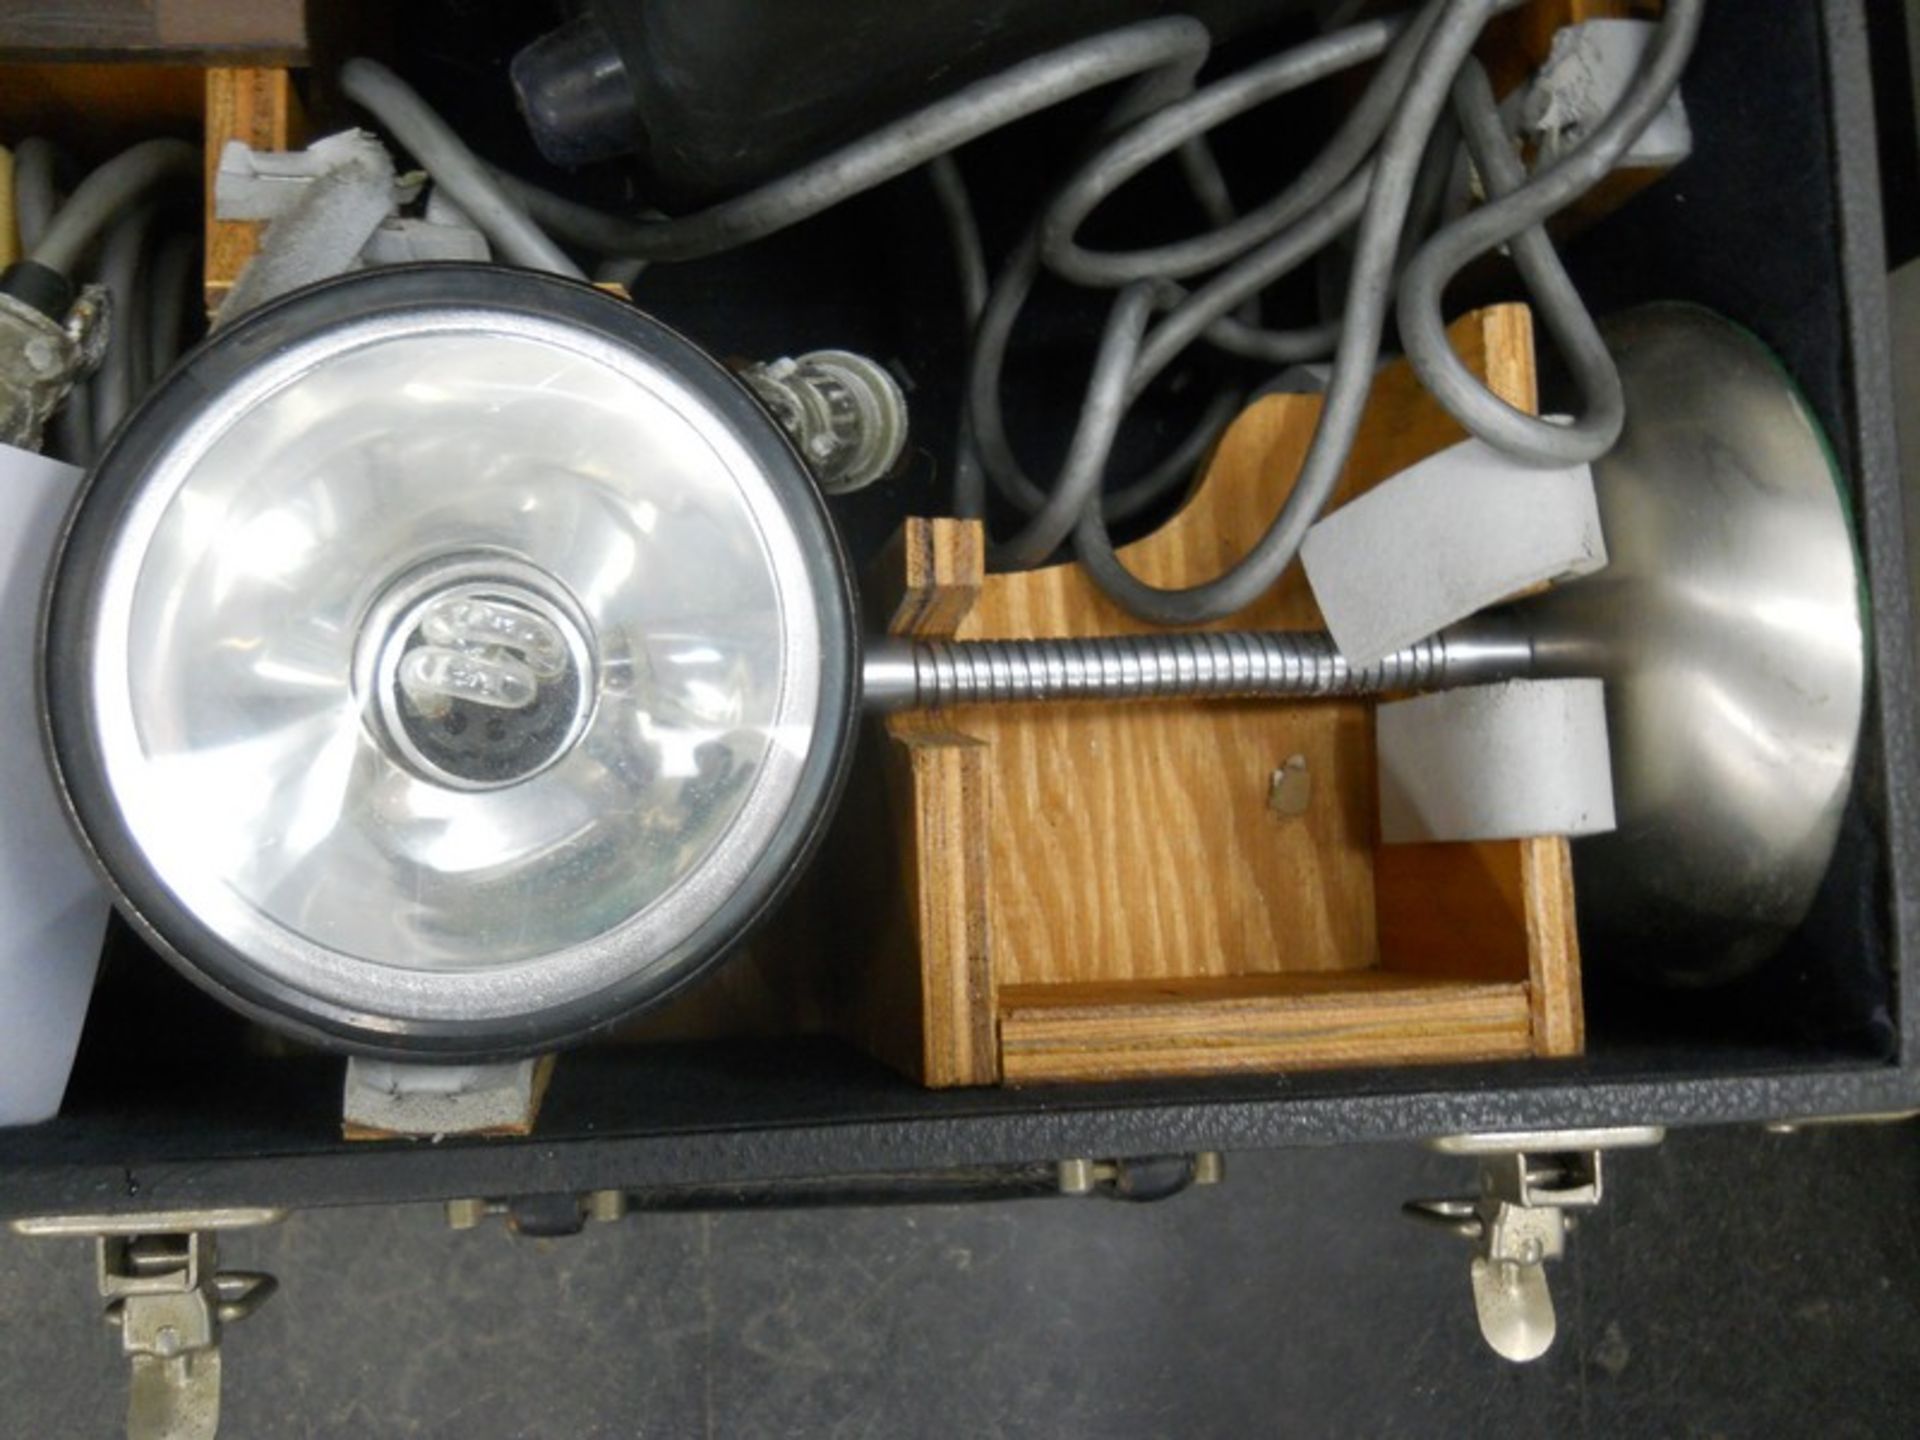 Power Instruments Model 932 Tachlite Precision Stroboscope/Tachometer - Image 3 of 4